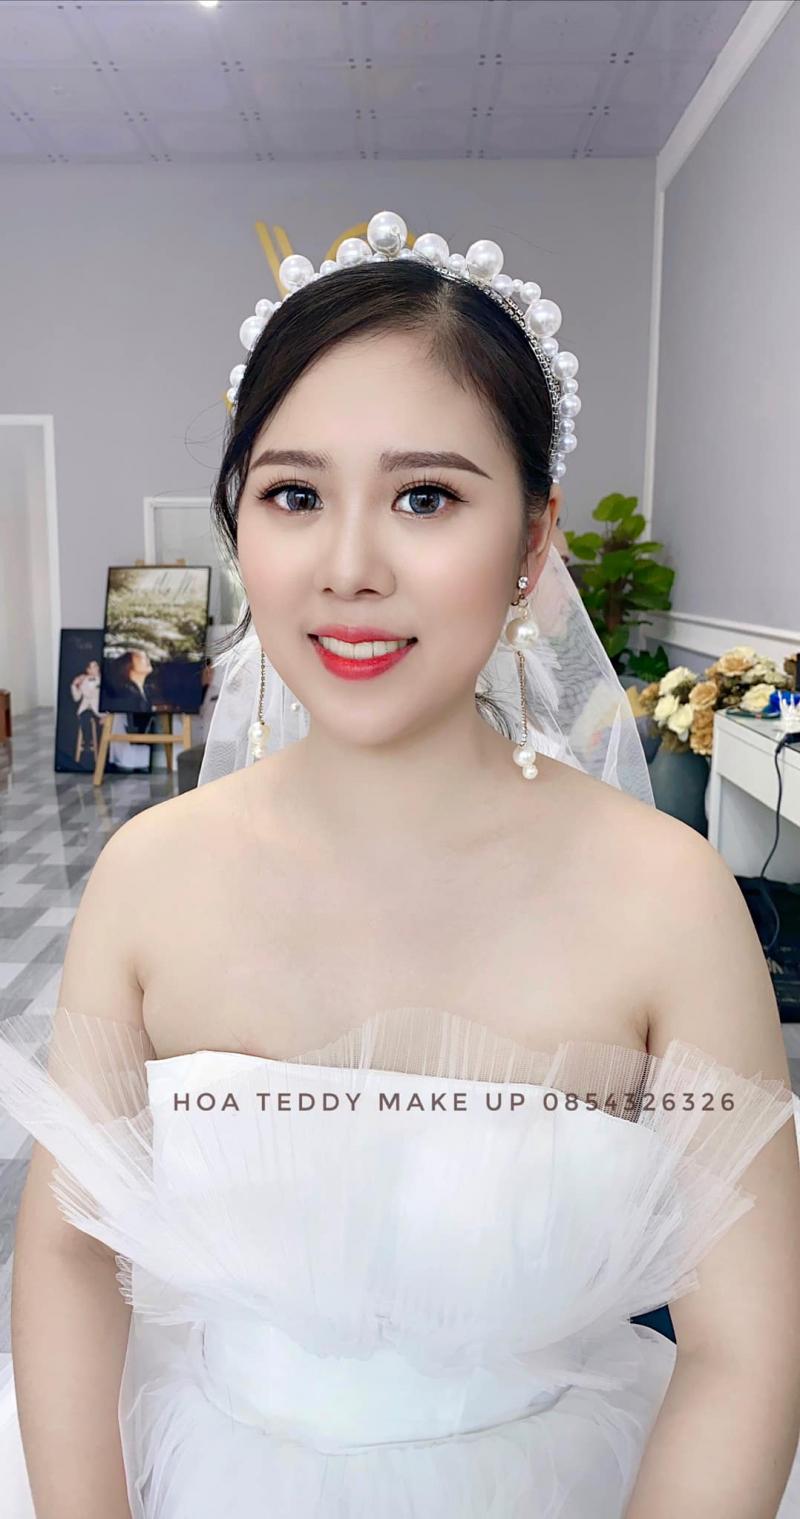 Hoa Teddy Makeup Store